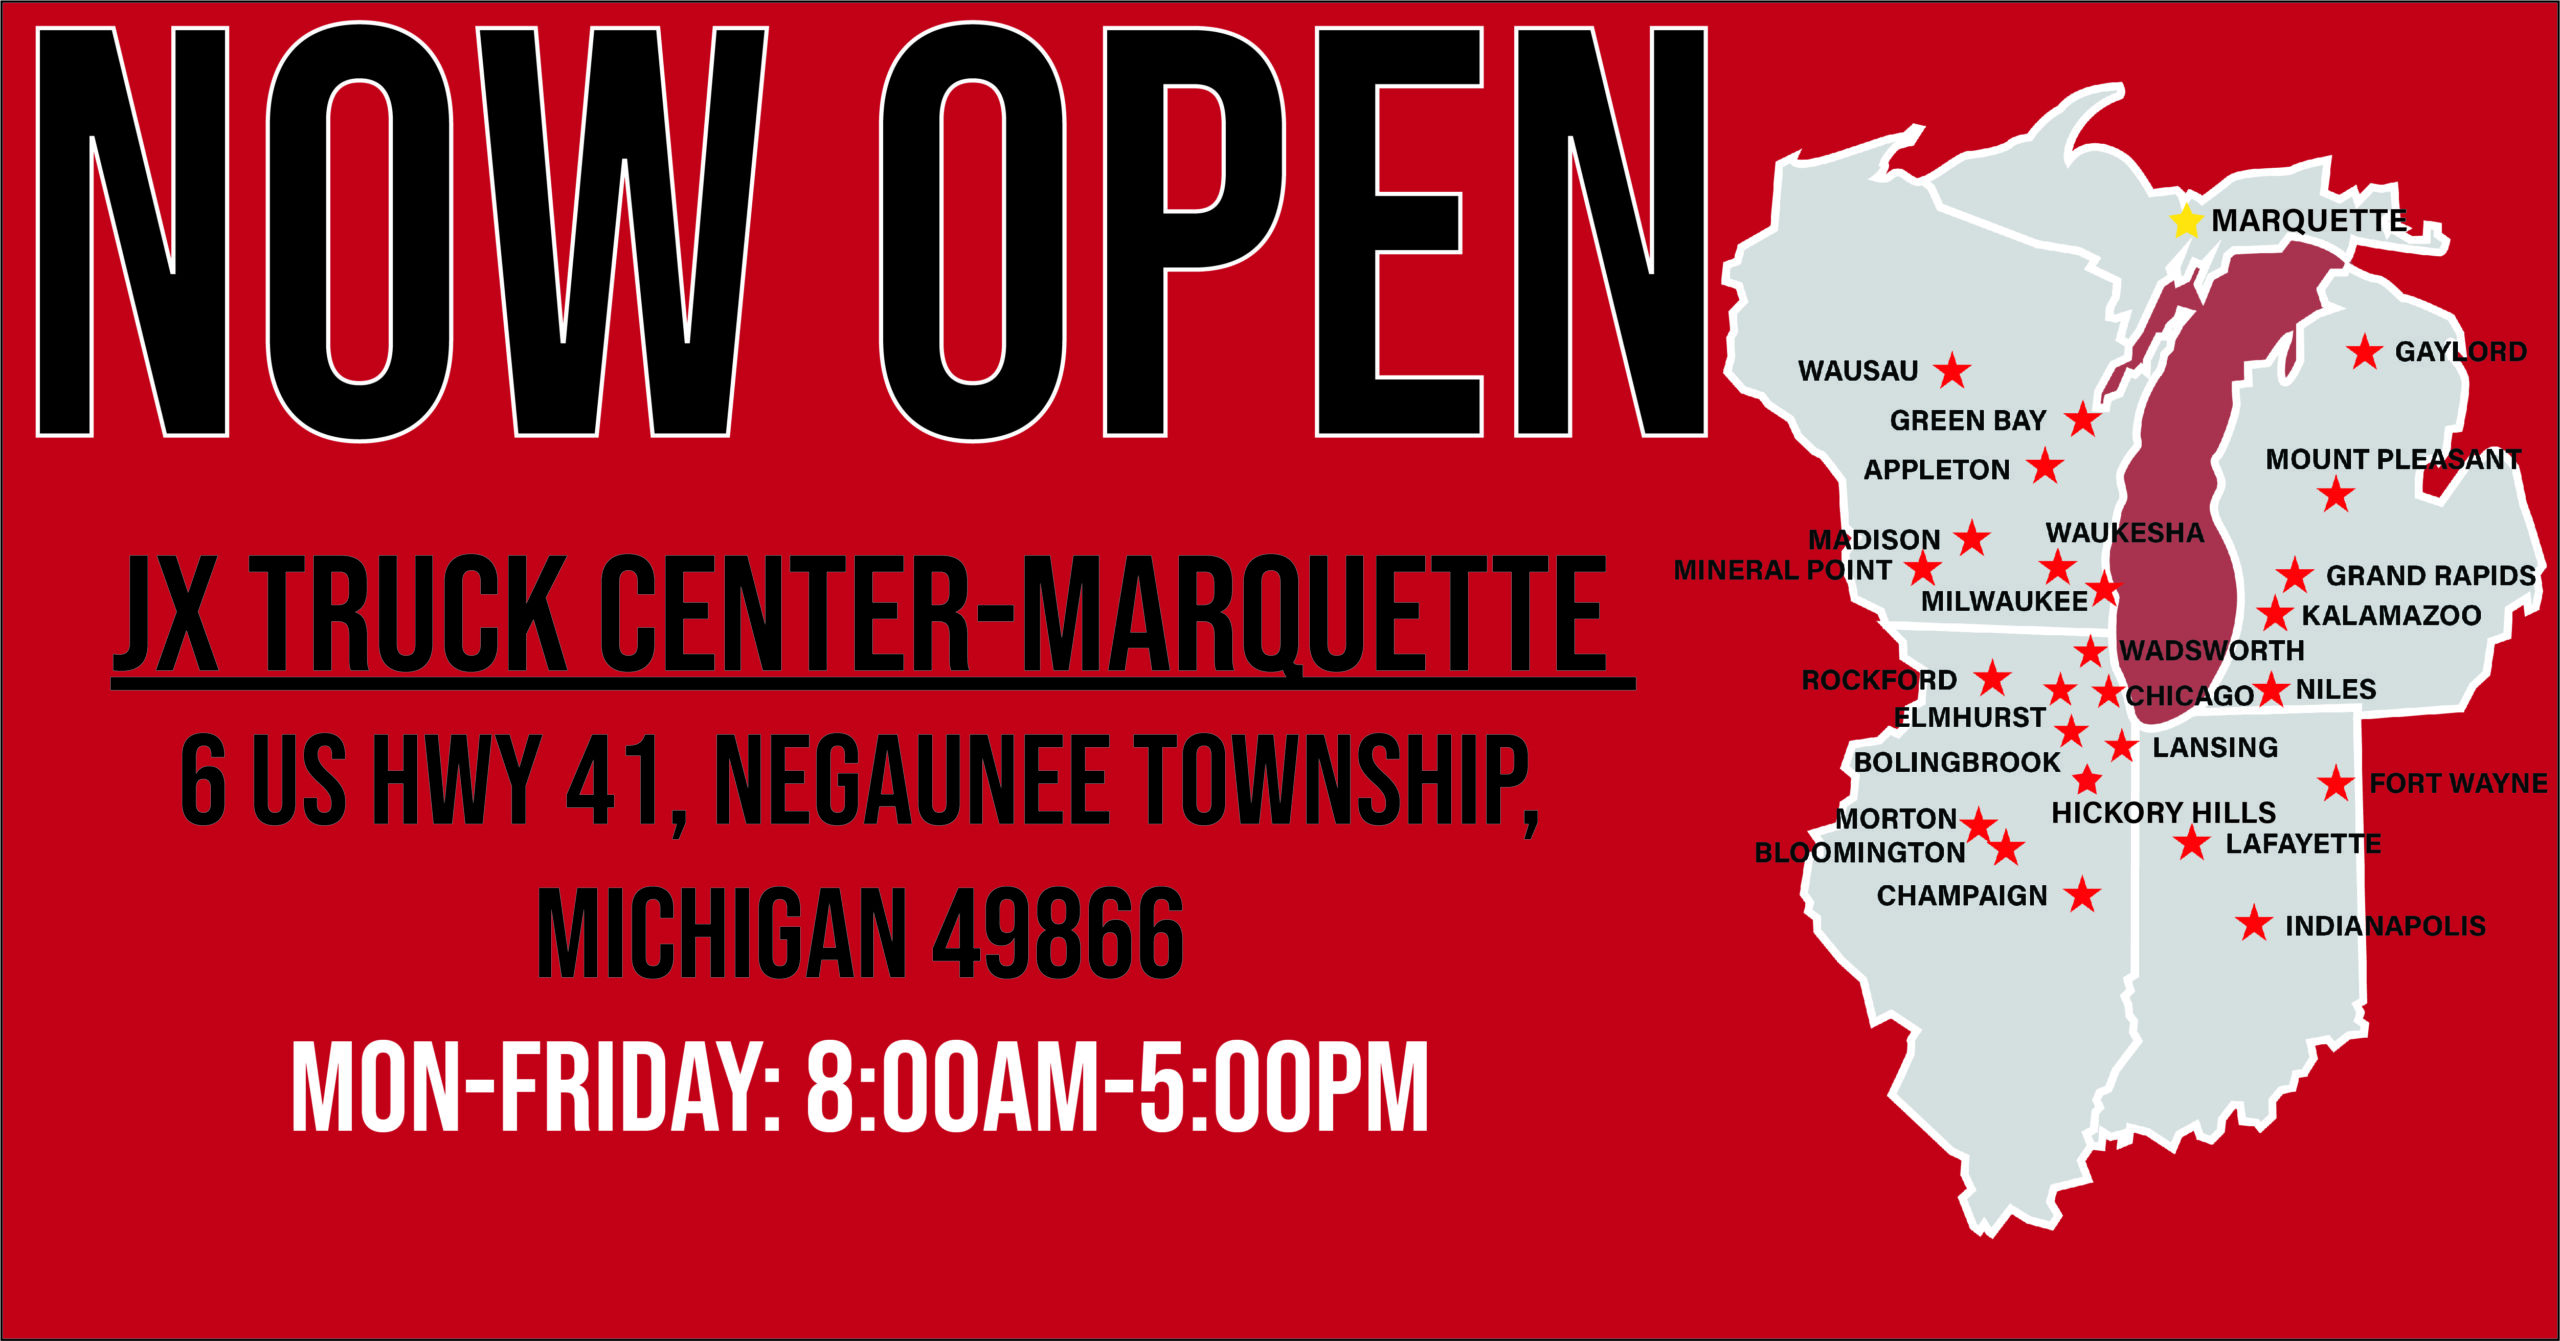 JX Truck Center Marquette now open announcement